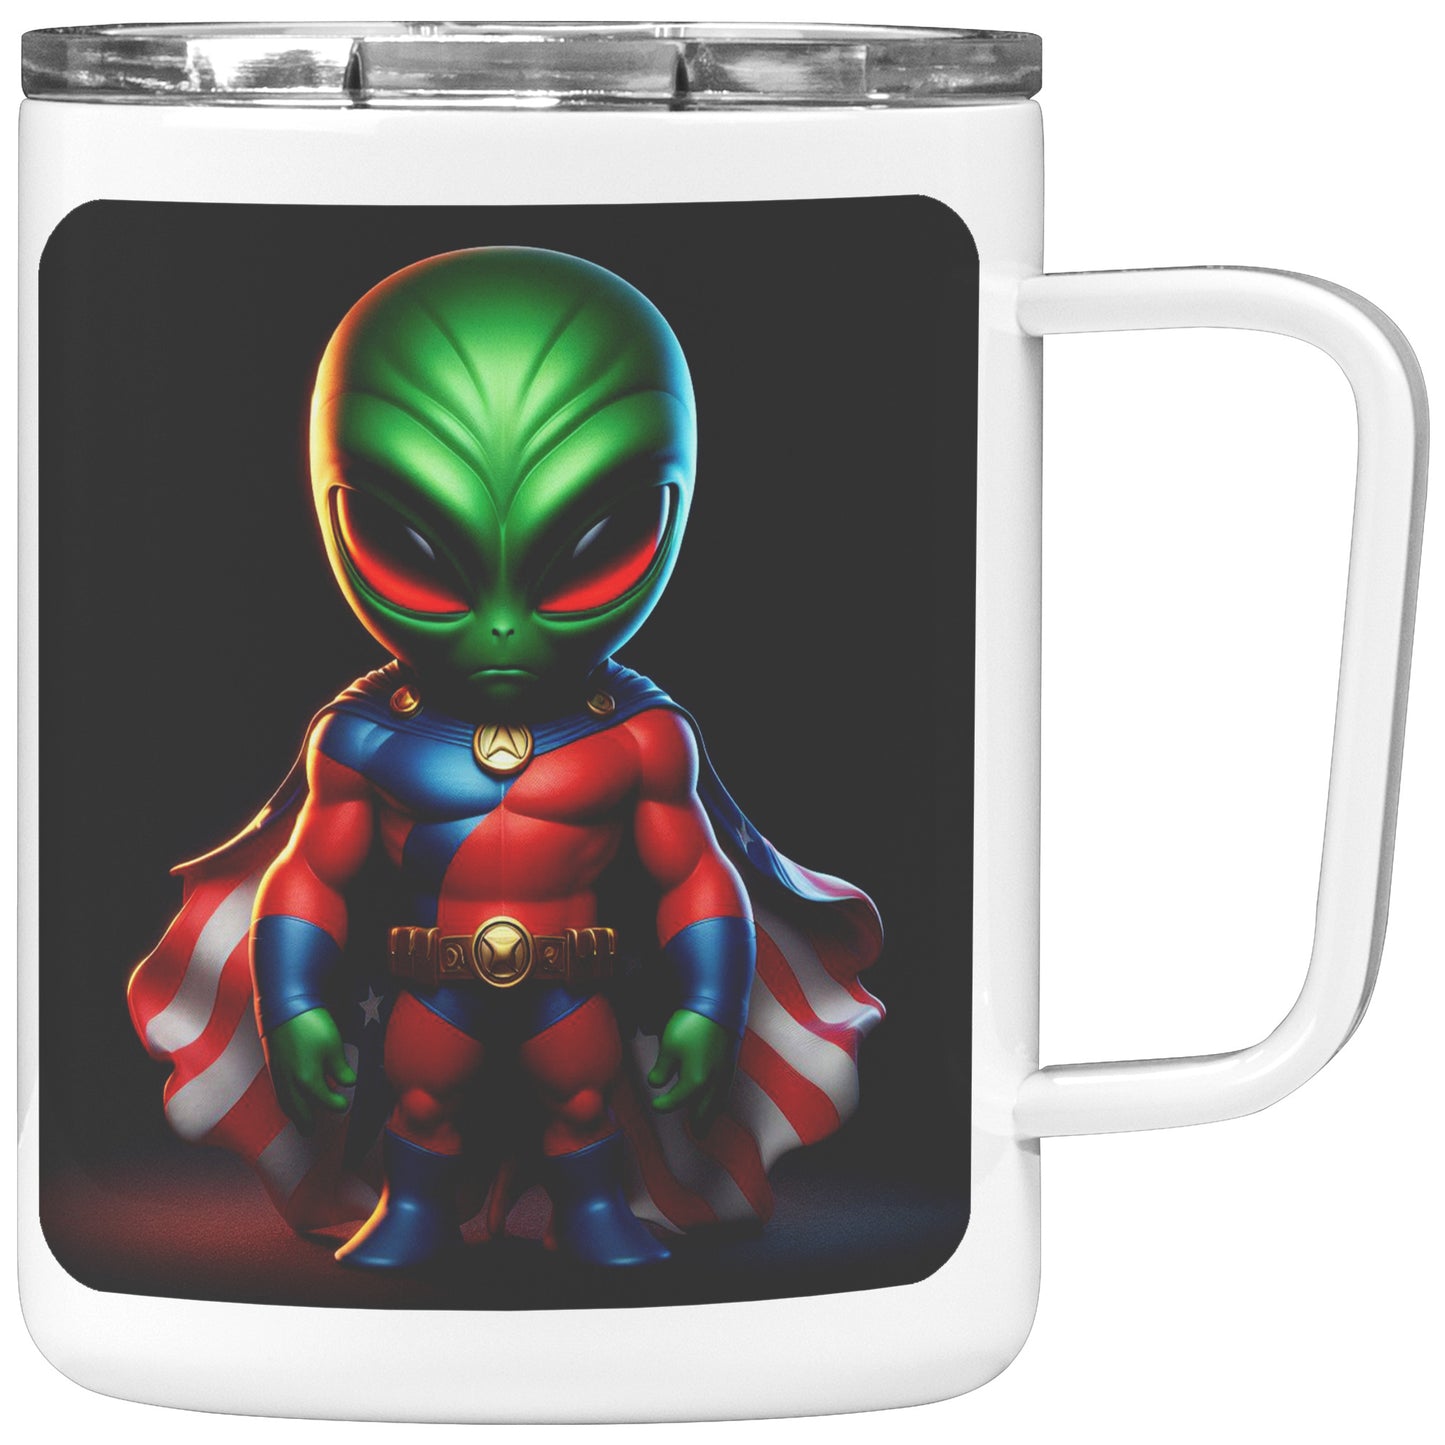 Martian Alien Caricature - Coffee Mug #1